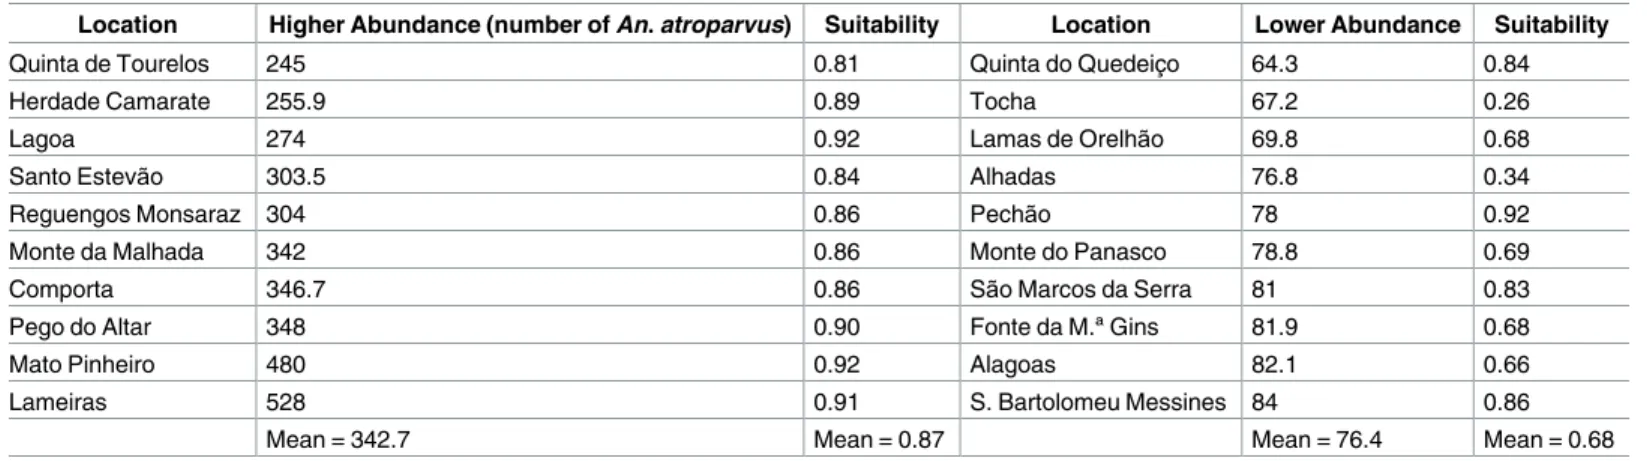 Table 2. Maximum and minimum values of An. atroparvus’ abundance in mainland Portugal.